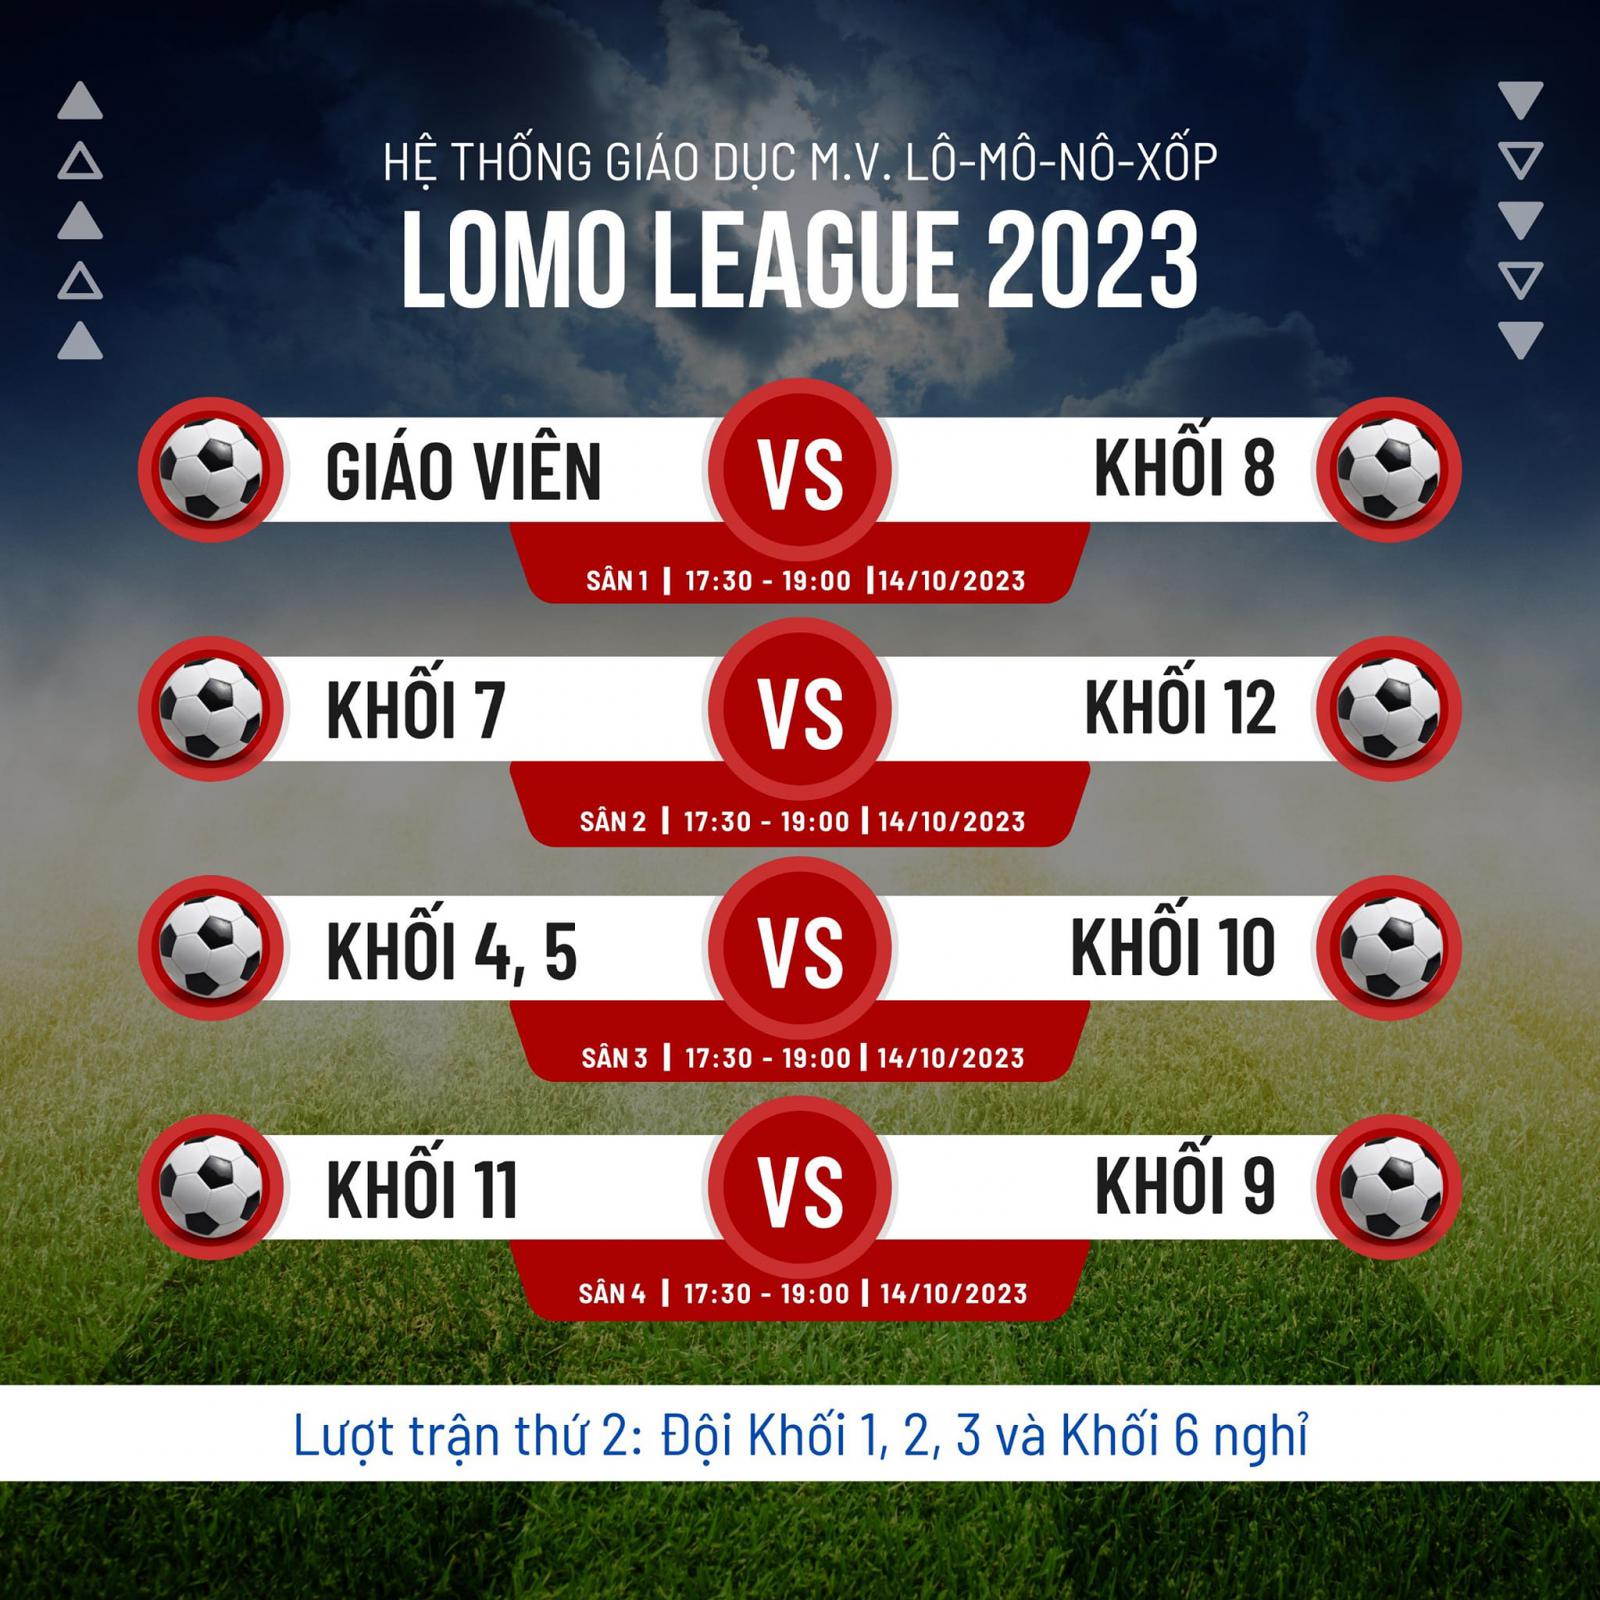 Kết quả lượt trận thứ Hai giải LOMO LEAGUE 2023